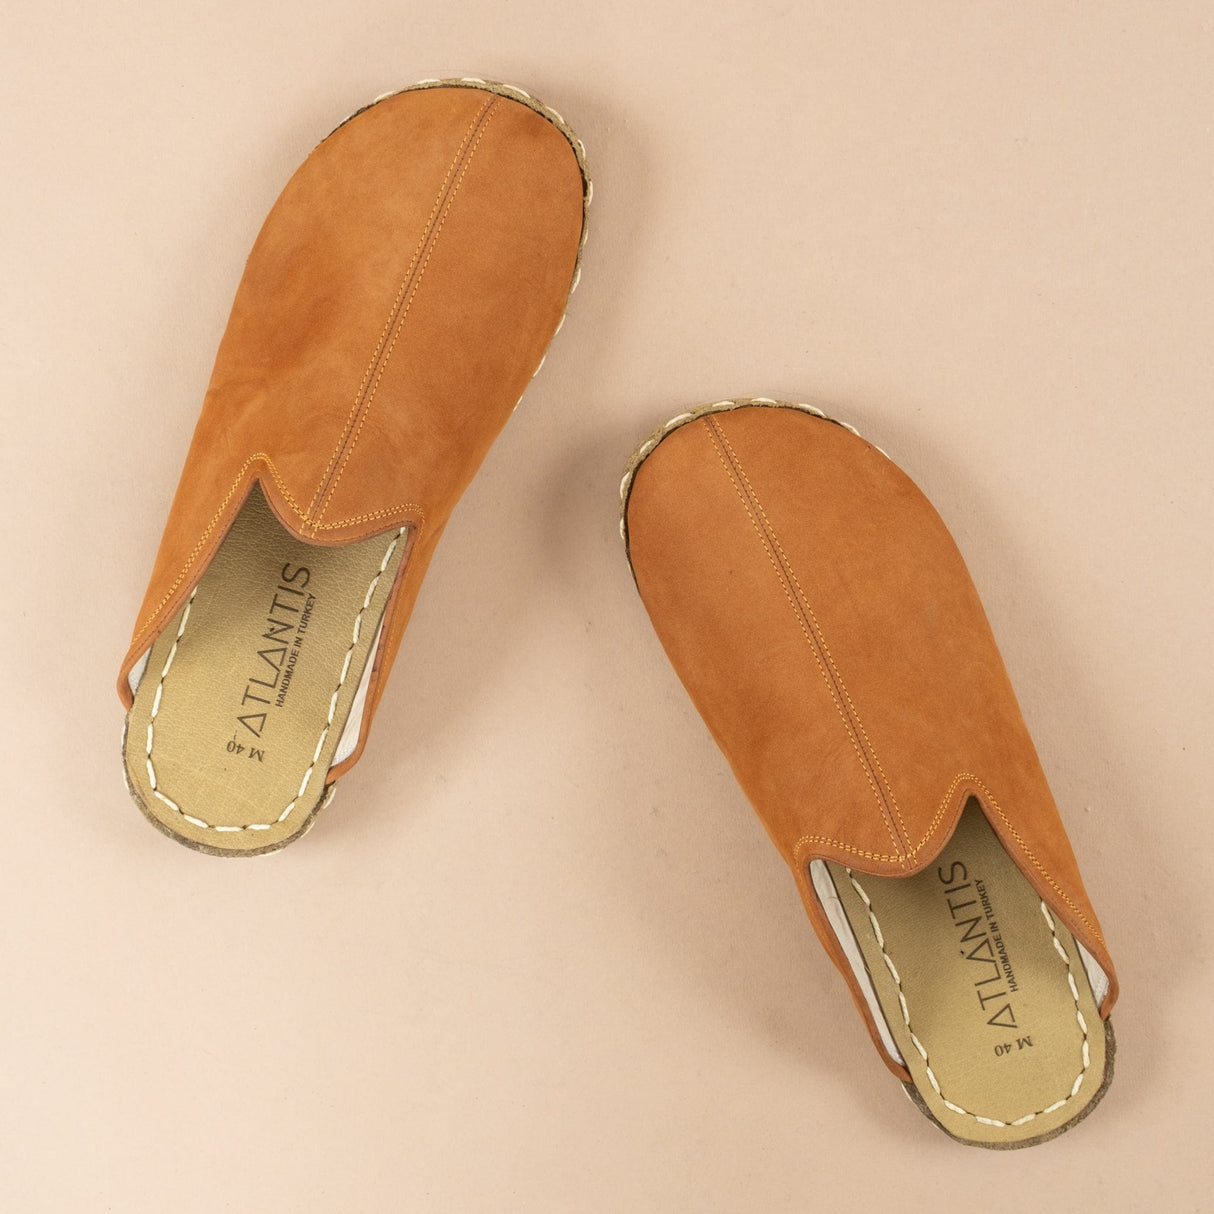 Men's Safari Barefoot Slippers